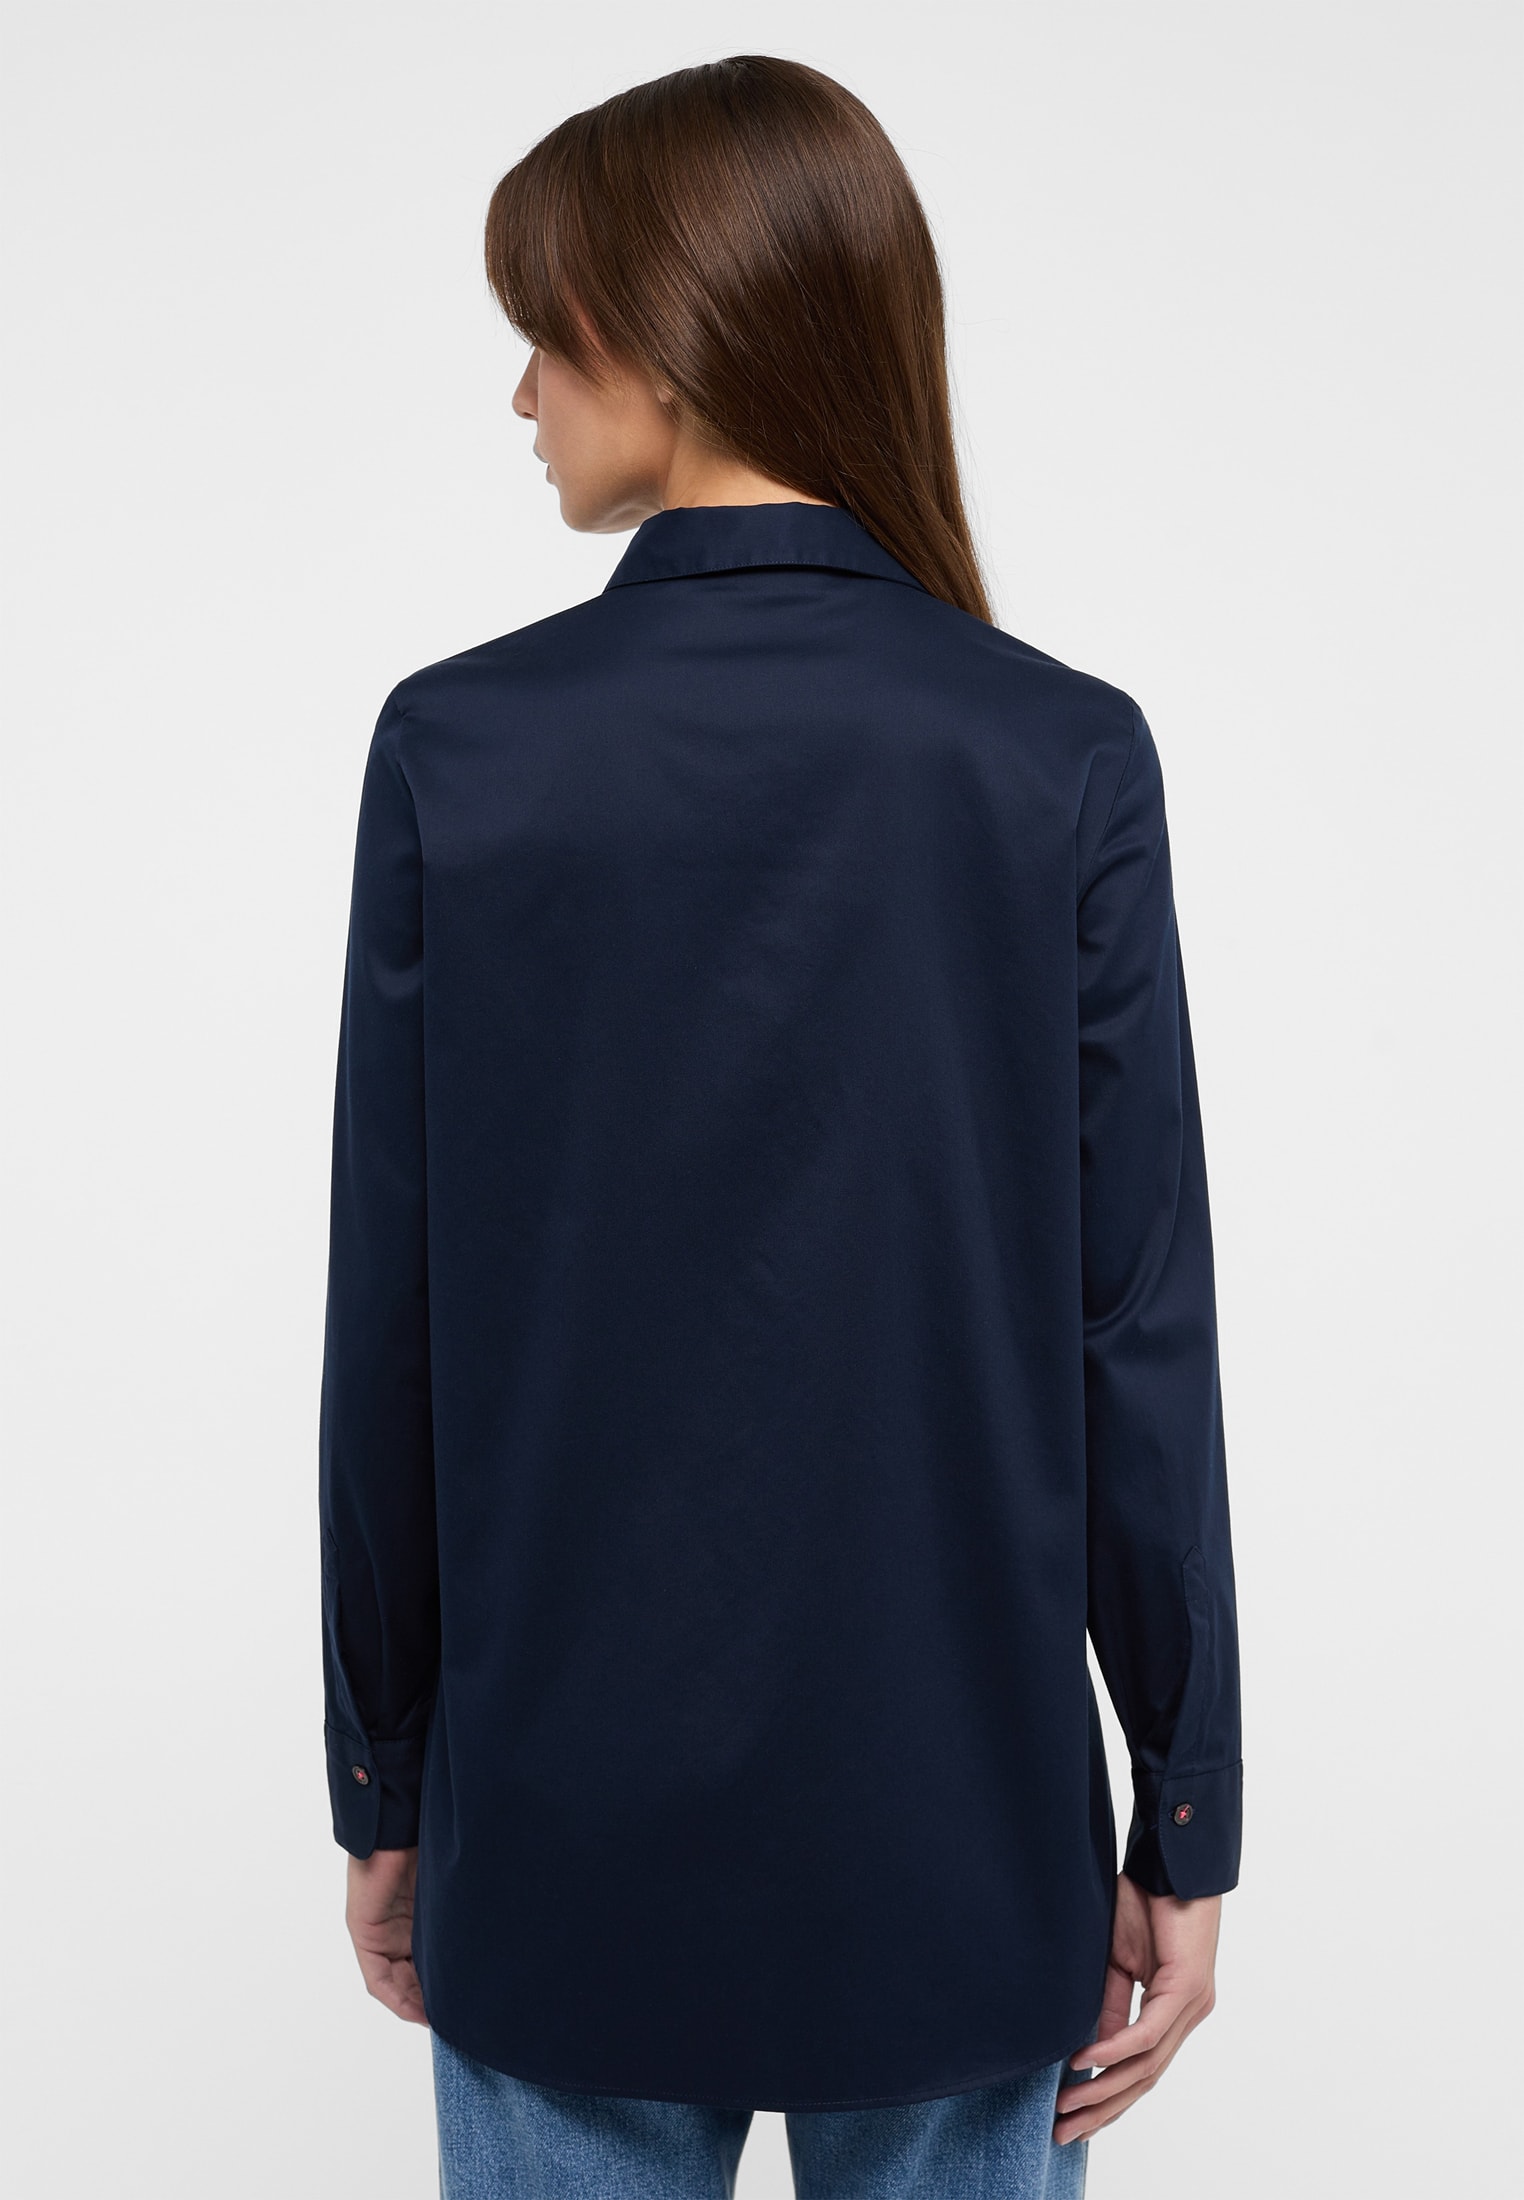 Soft Luxury Shirt Bluse in navy unifarben | navy | 40 | Langarm |  2BL04182-01-91-40-1/1